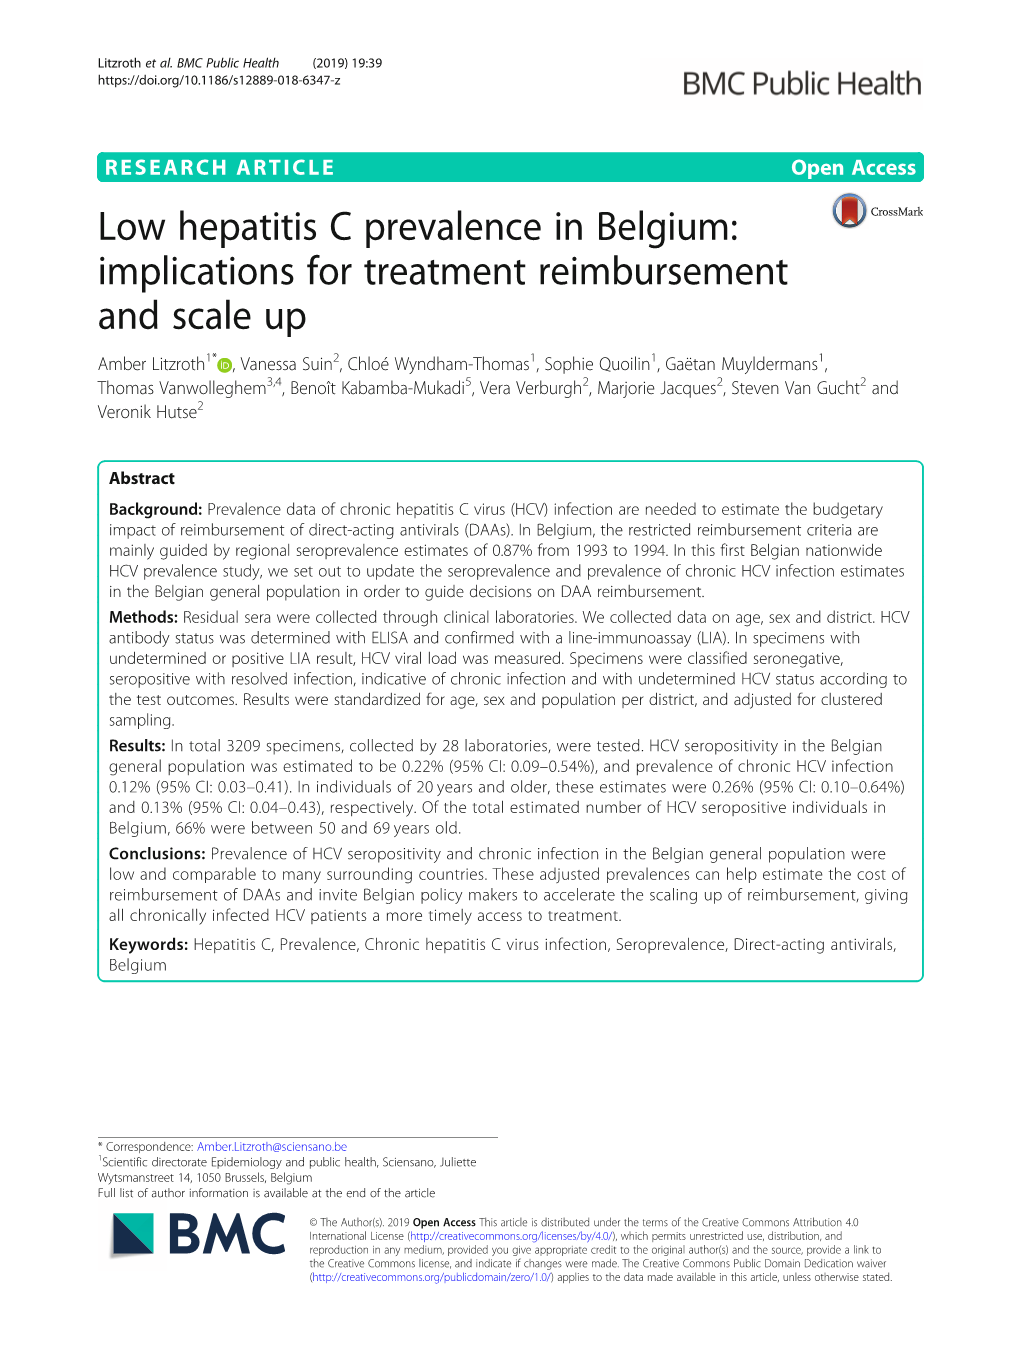 Low Hepatitis C Prevalence in Belgium: Implications for Treatment